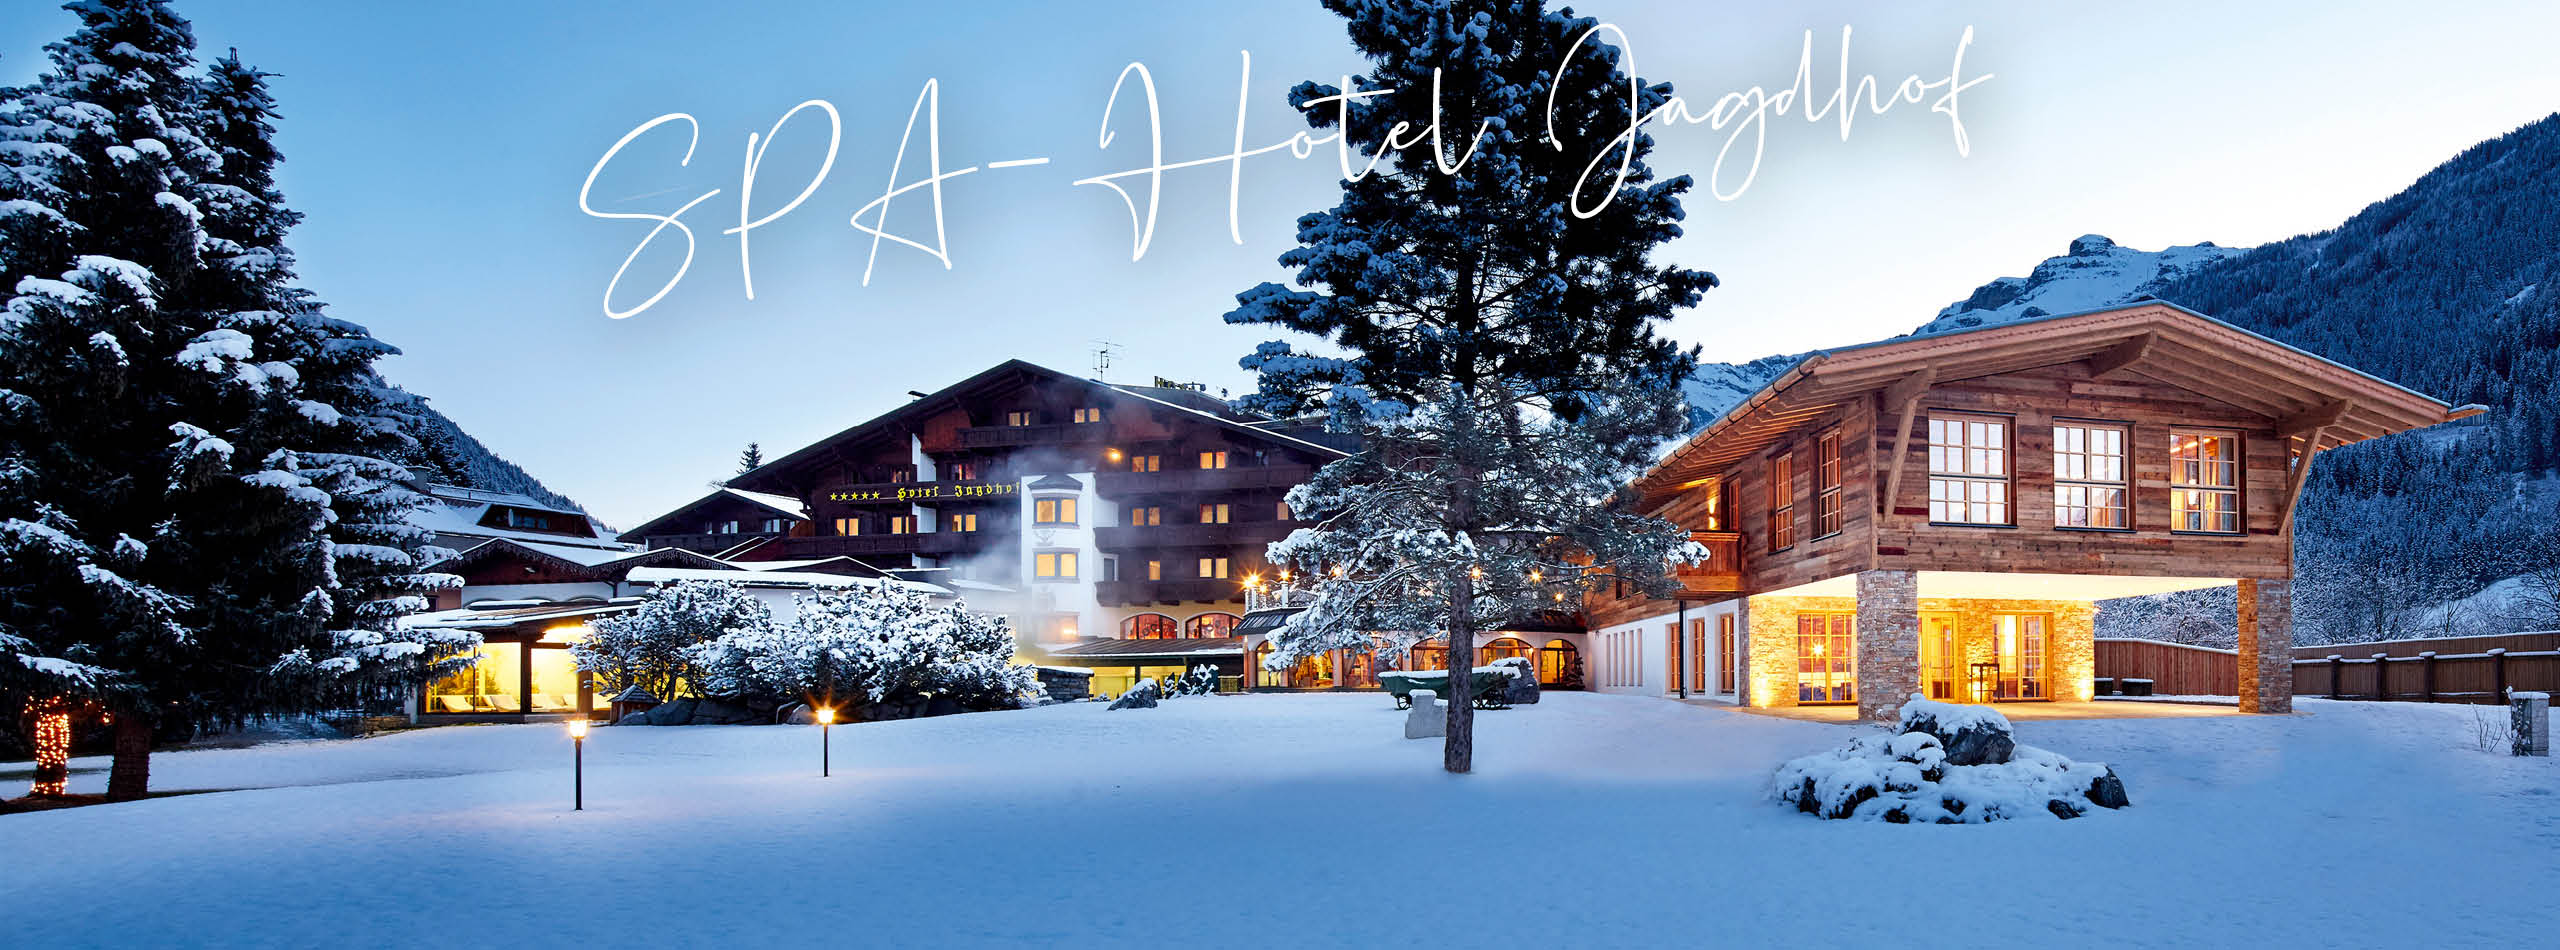 SPA-HOTEL Jagdhof Neustift Stubai Valley Tyrol, Austria